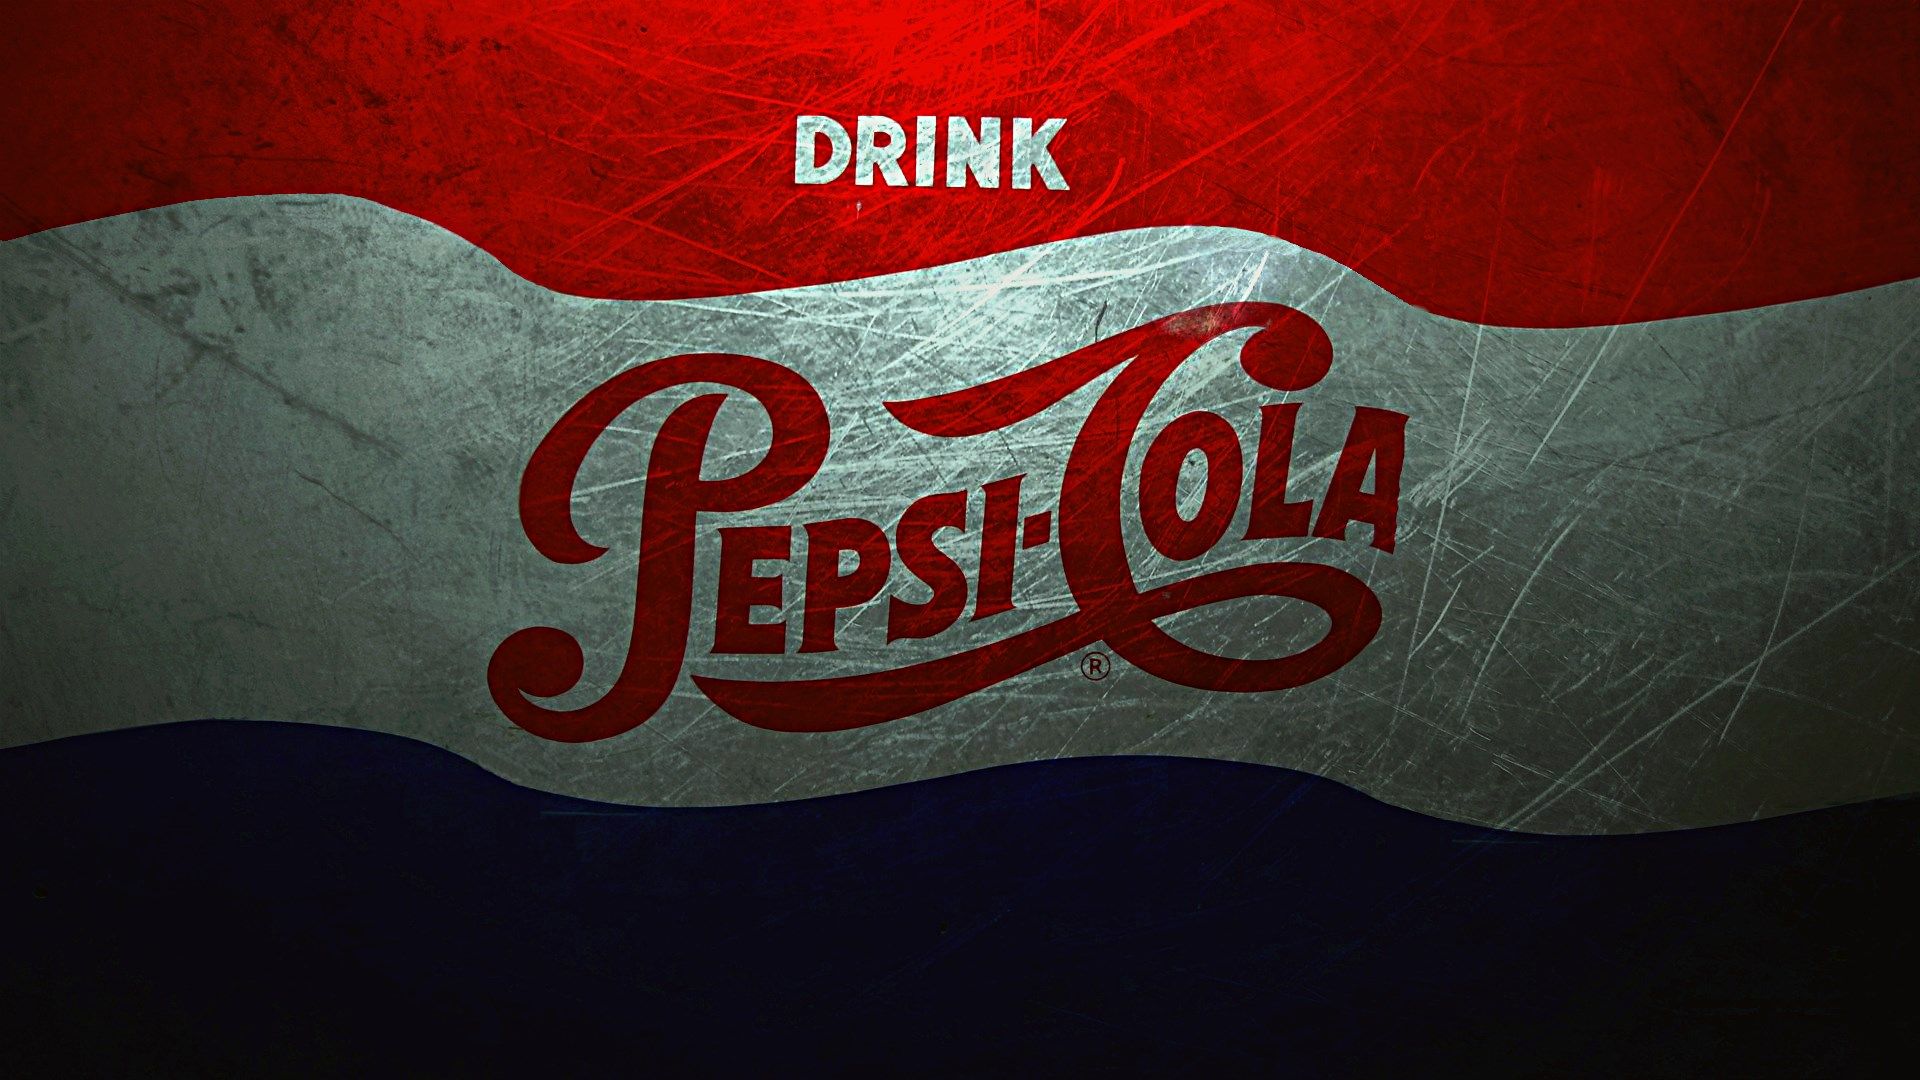 HD wallpaper, Drink, Cola, Pepsi